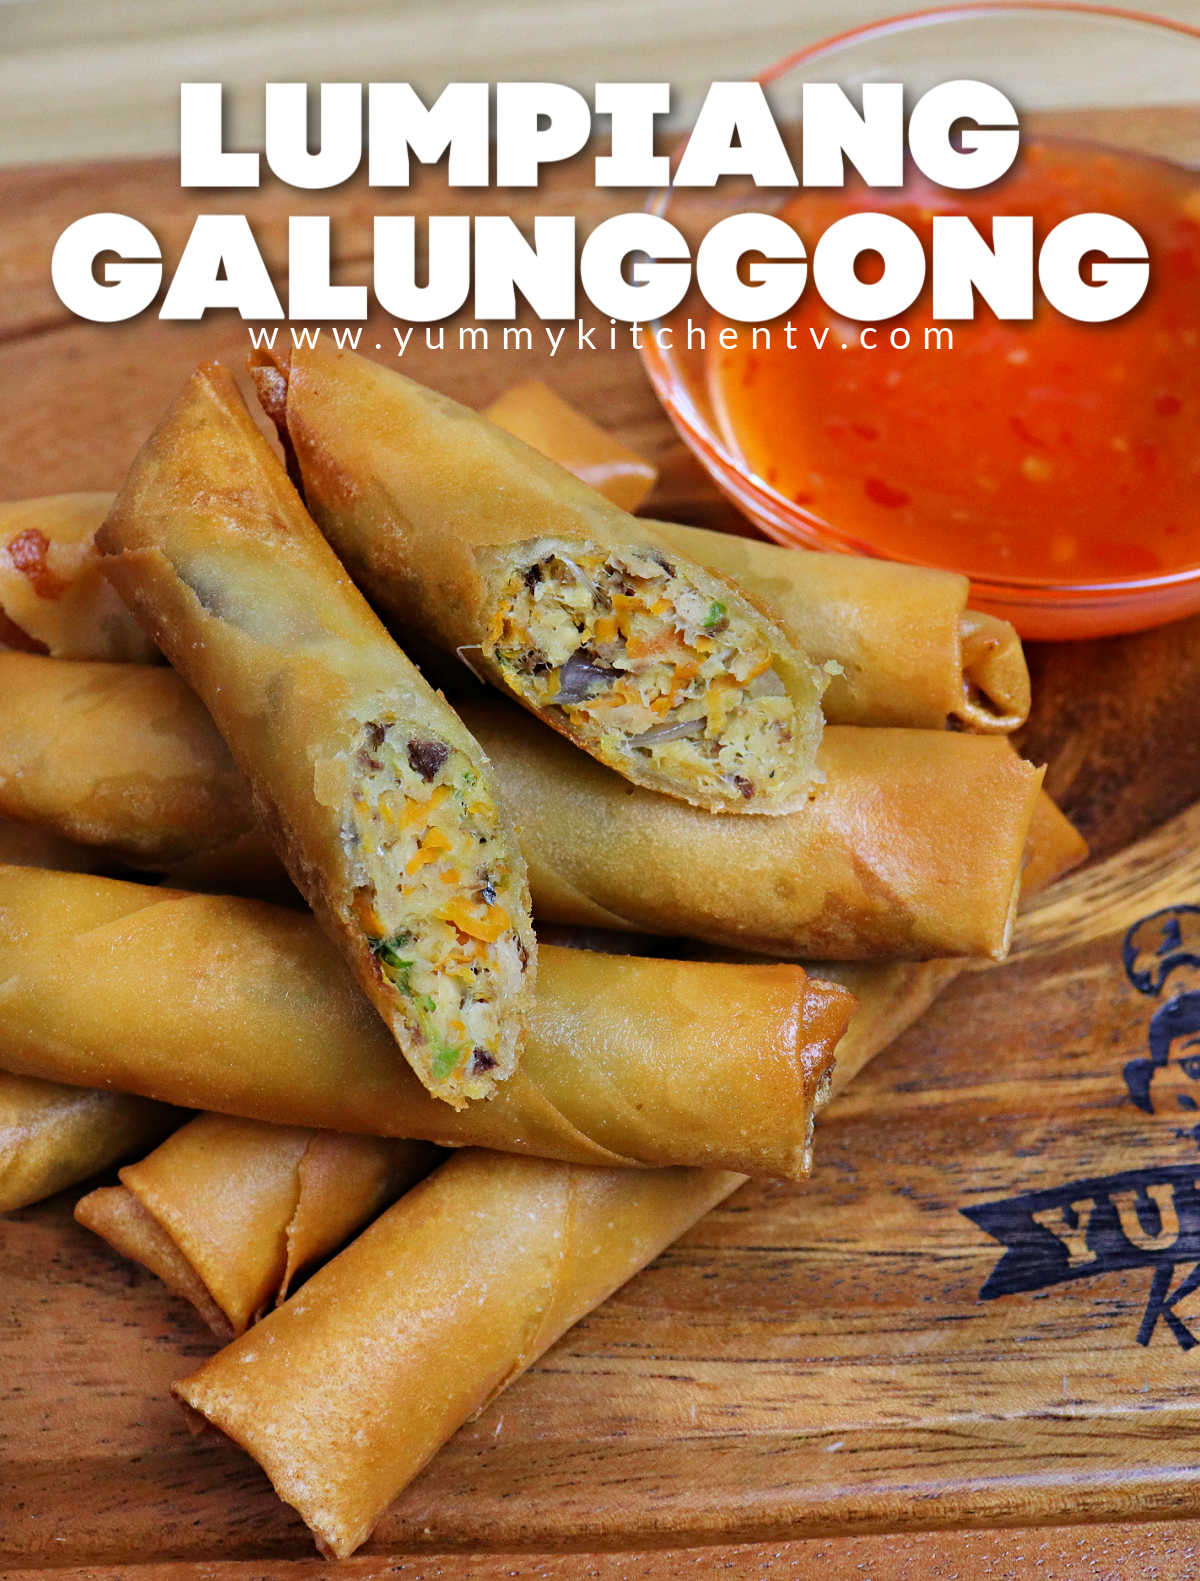 Lumpiang Galunggong - Yummy Kitchen